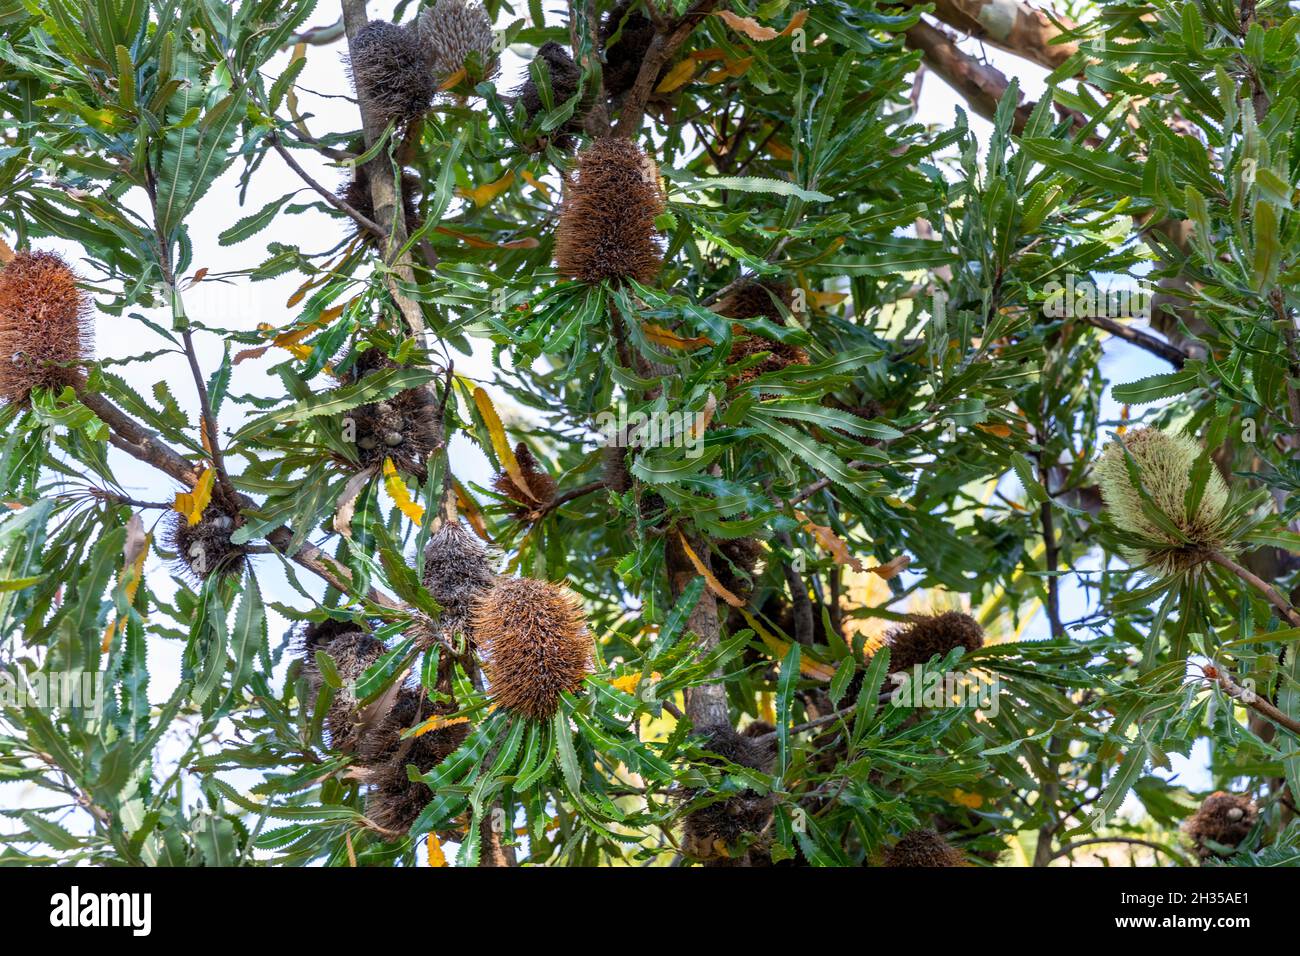 Banksia australian native tree shrub in Avalon Beach,Sydney,Australia Stock Photo